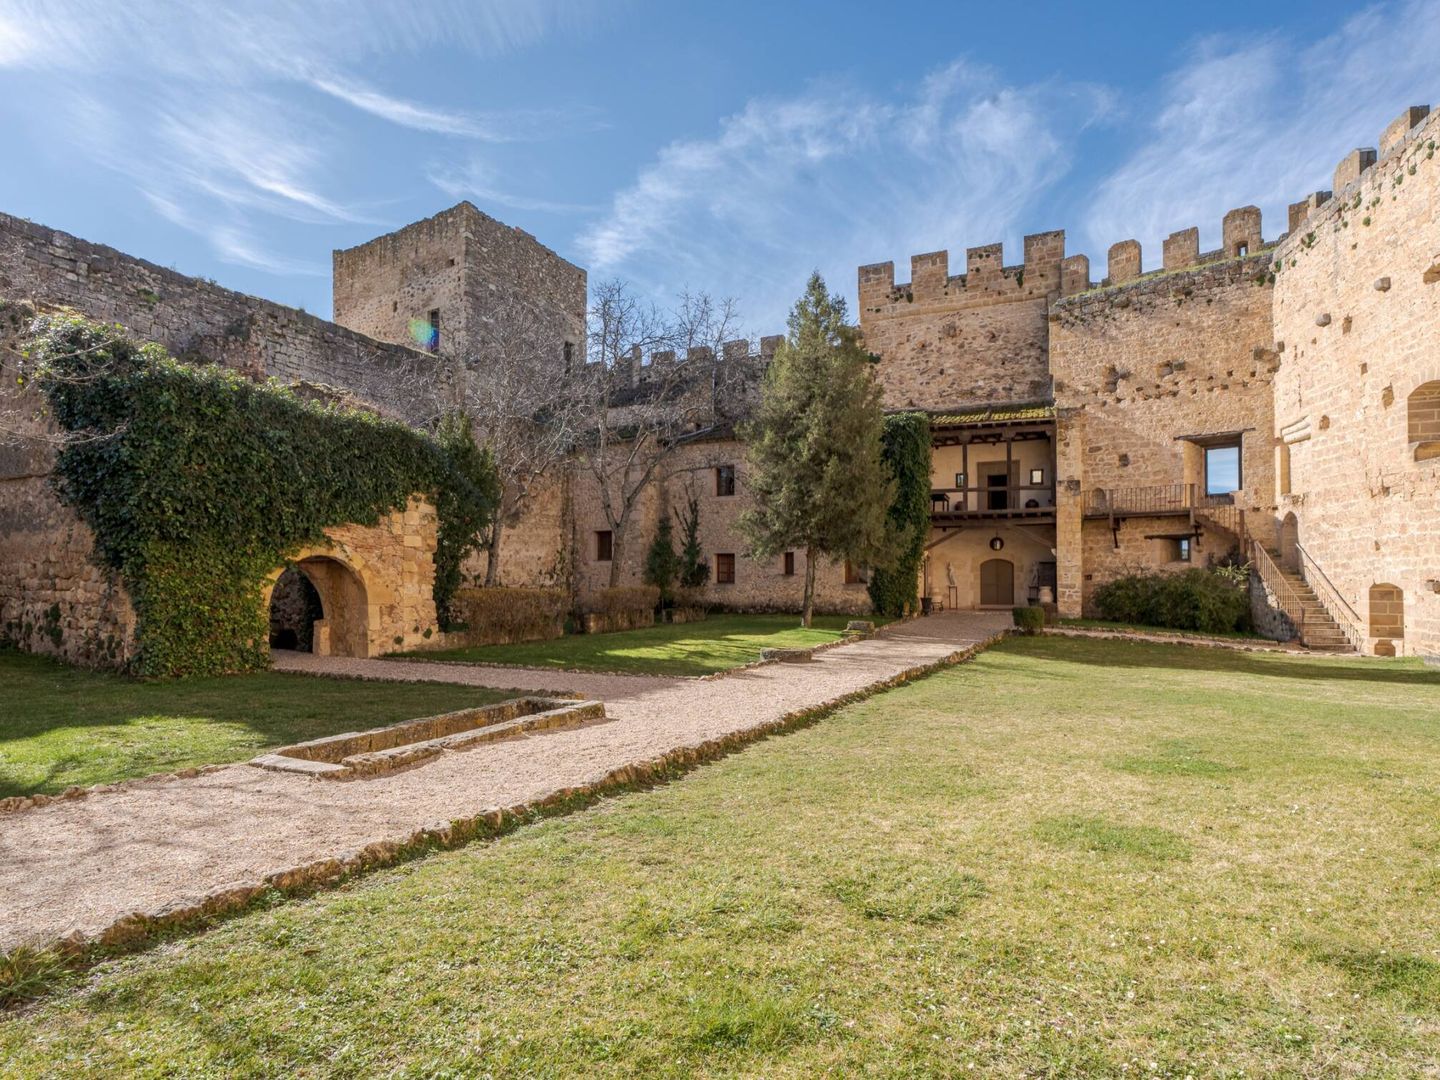 Castillo de Pedraza, en Segovia. (Kretz Family Real Estate).